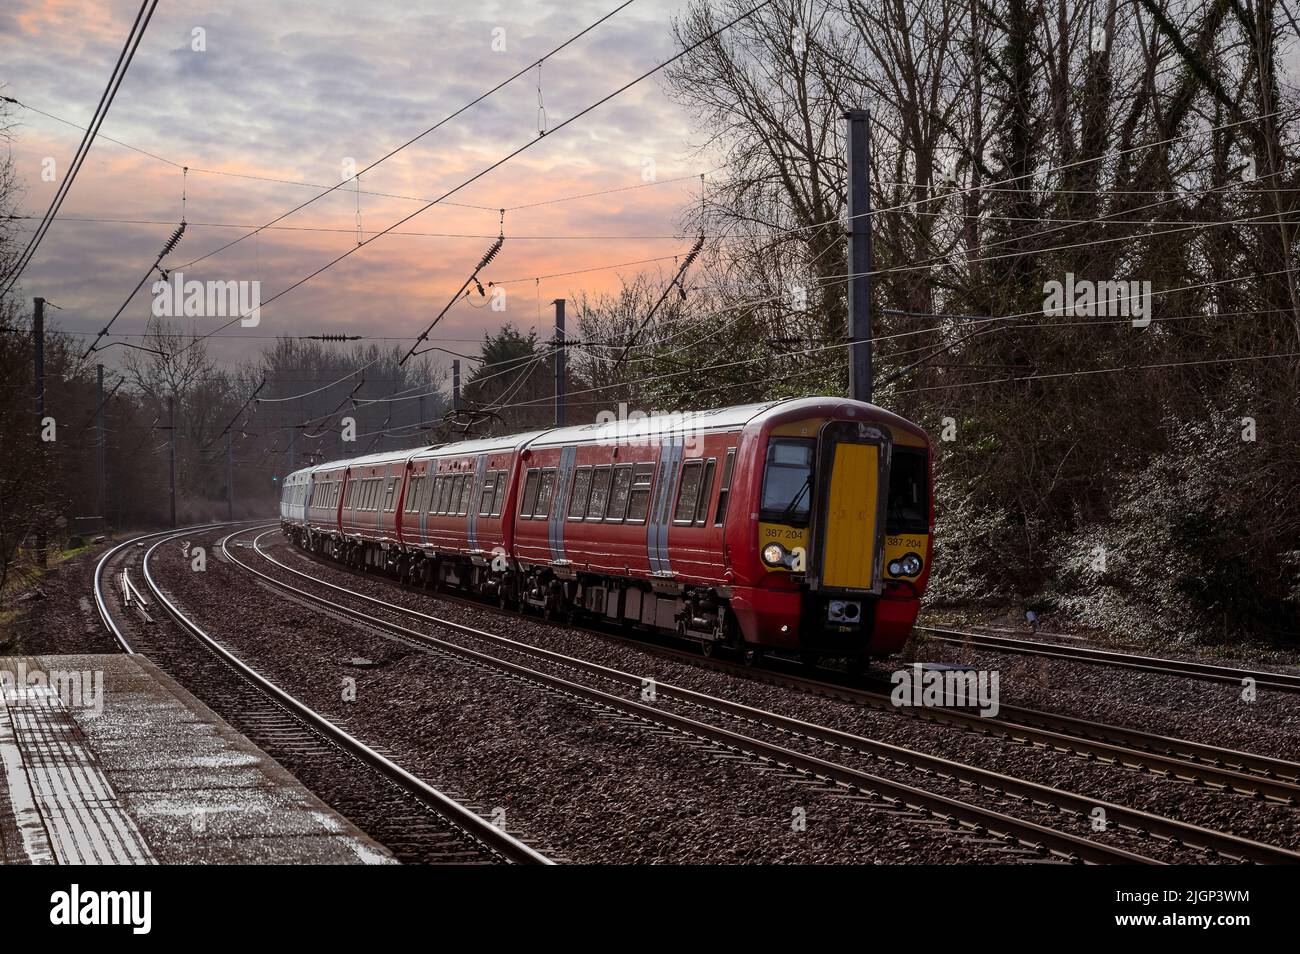 British rail class 387 passenger train in Gatwick Express livery. Stock Photo